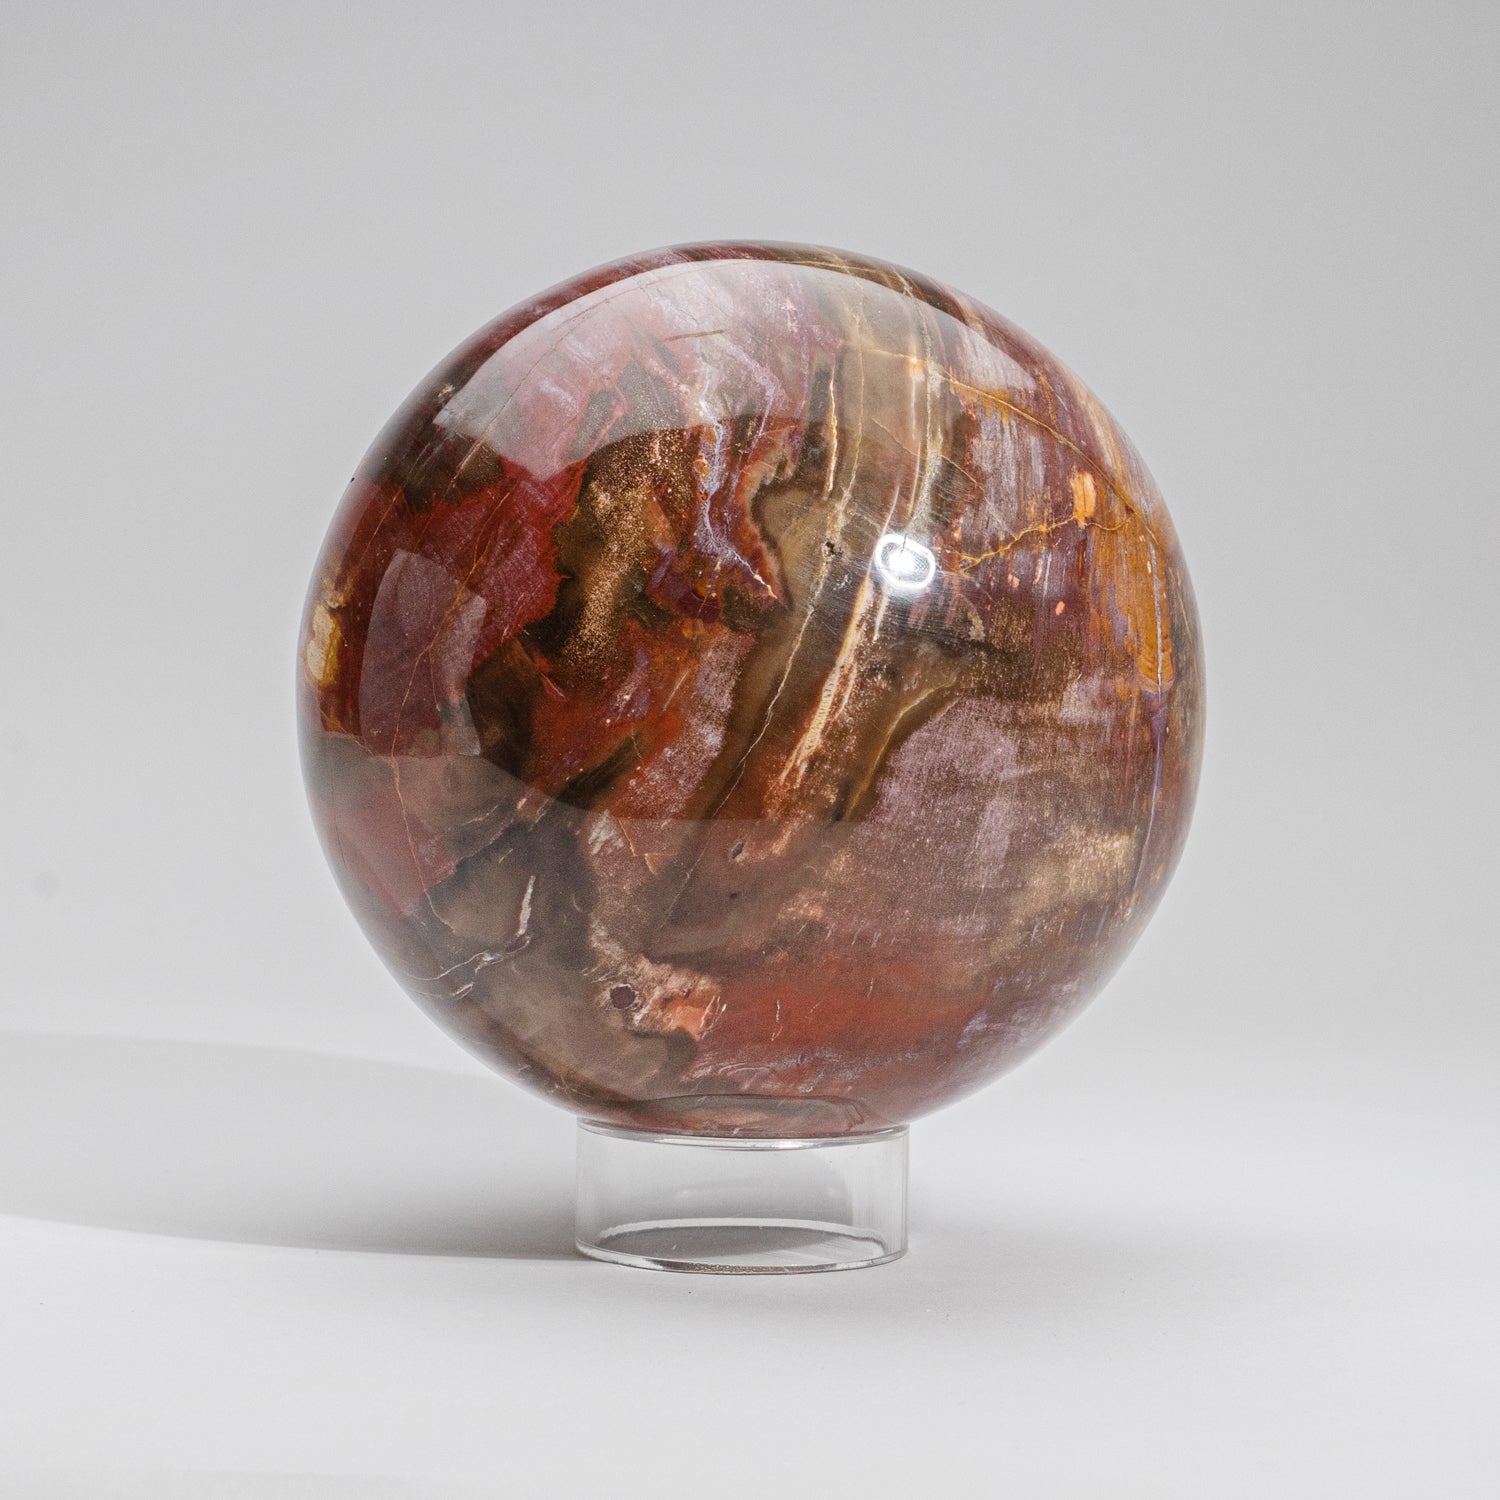 Large Genuine Polished Petrified Wood Sphere from Madagascar (6.75", 15.4 lbs)